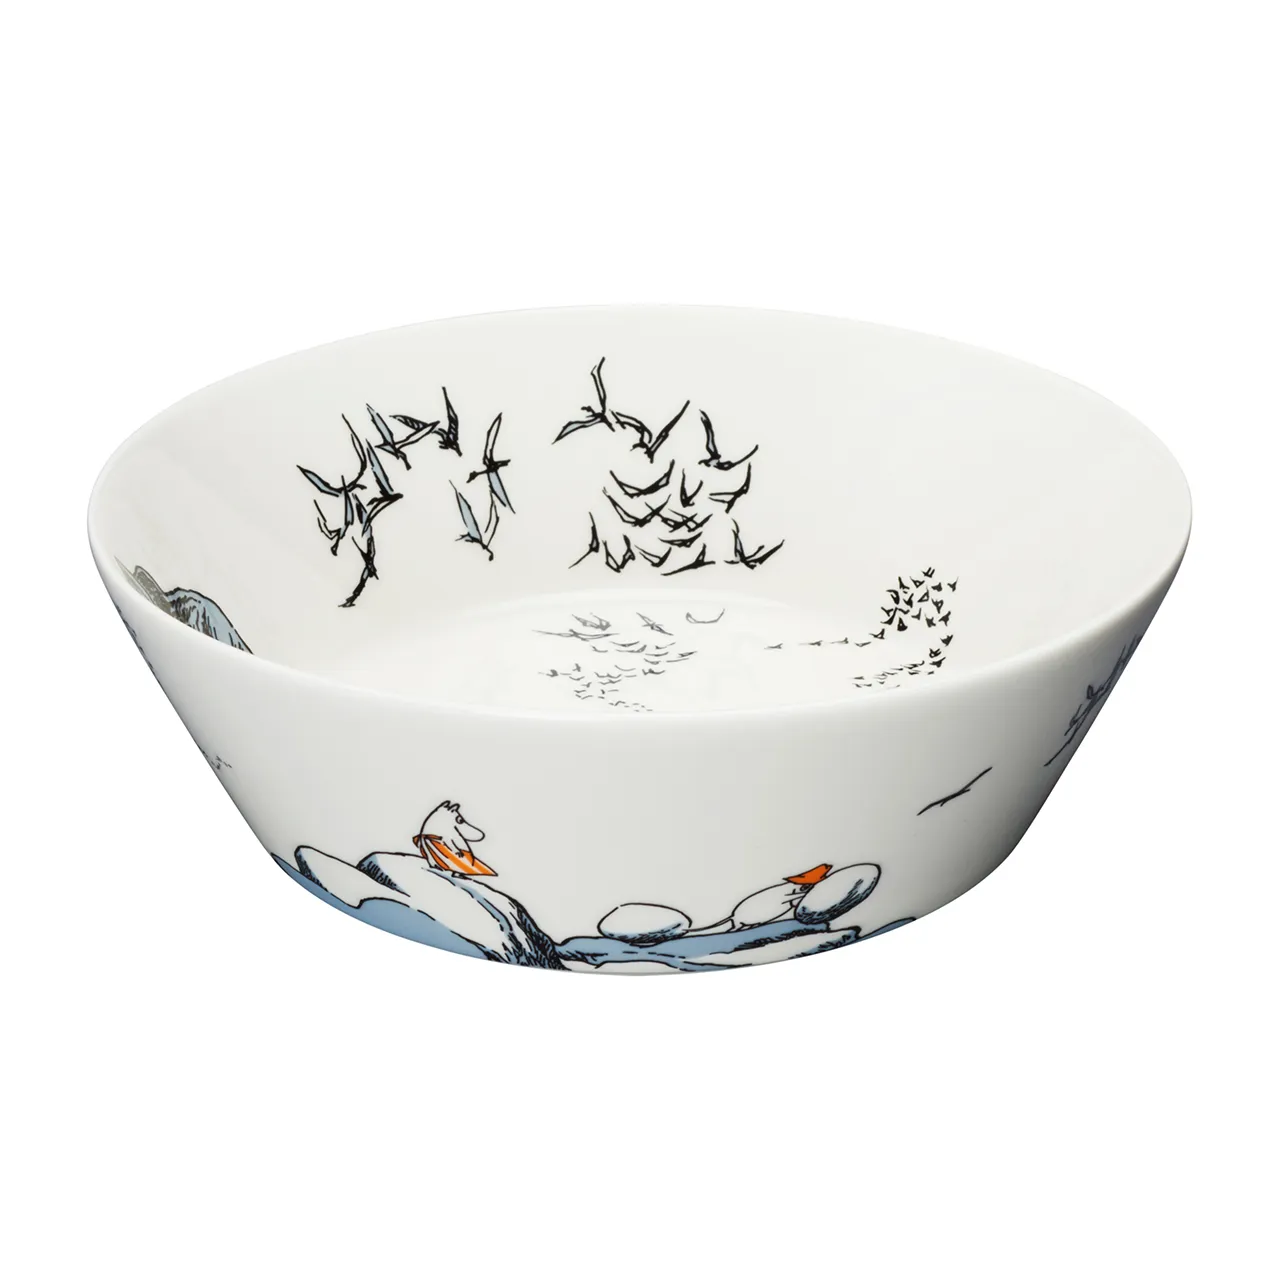 1024981_Moomin_moomin-serving-bowl-23cm-true-to-its-o._01.jpg